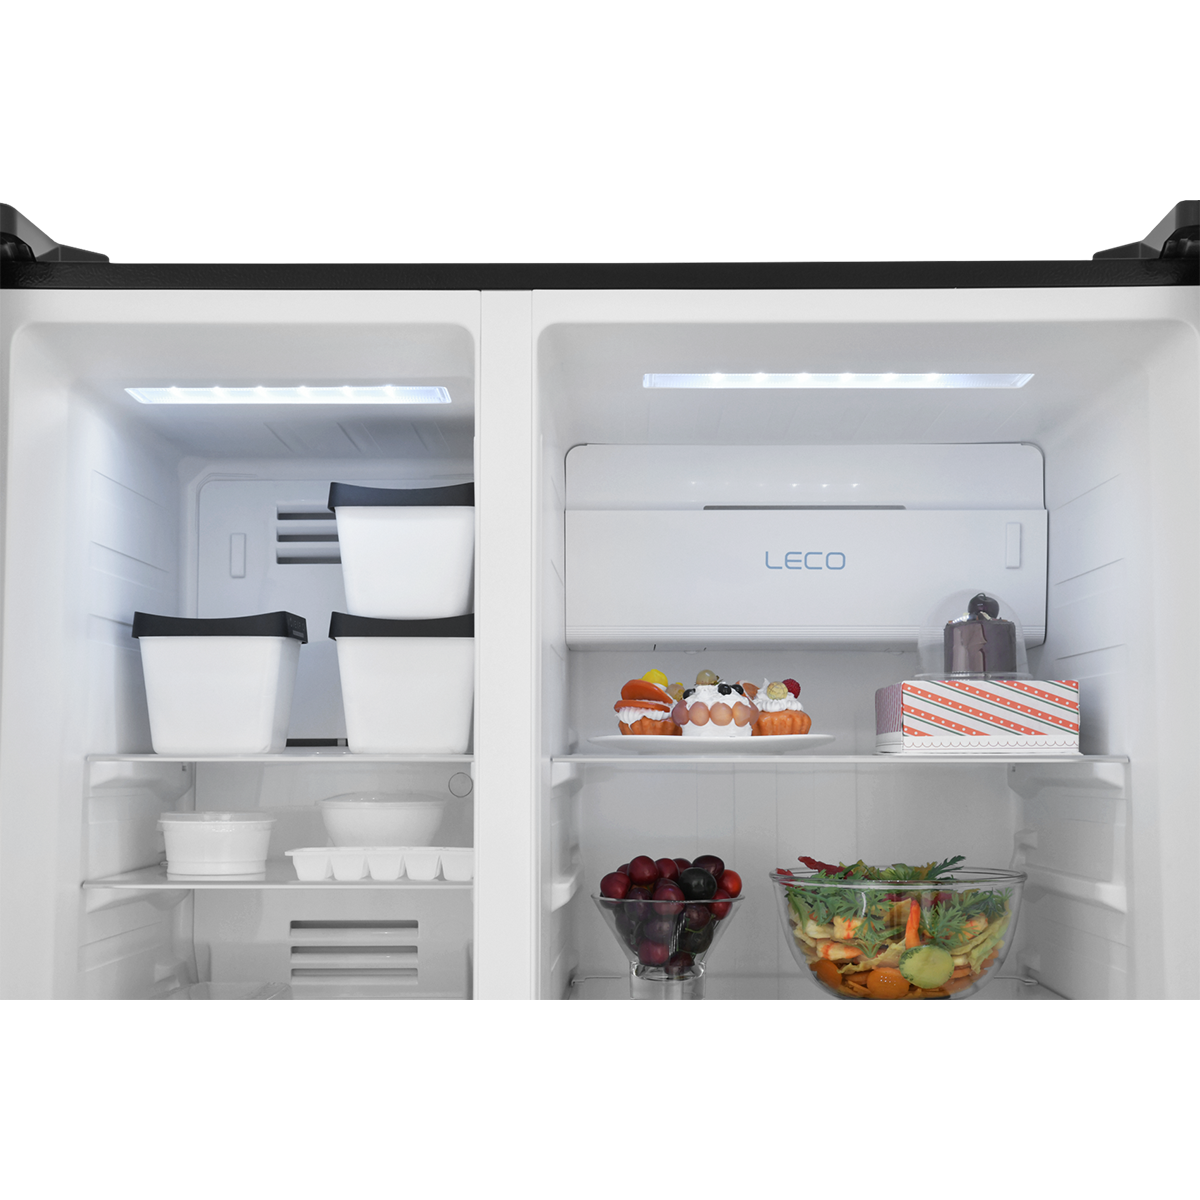 картинка Холодильник Side-by-Side ZUGEL ZRSS630B, чёрная сталь